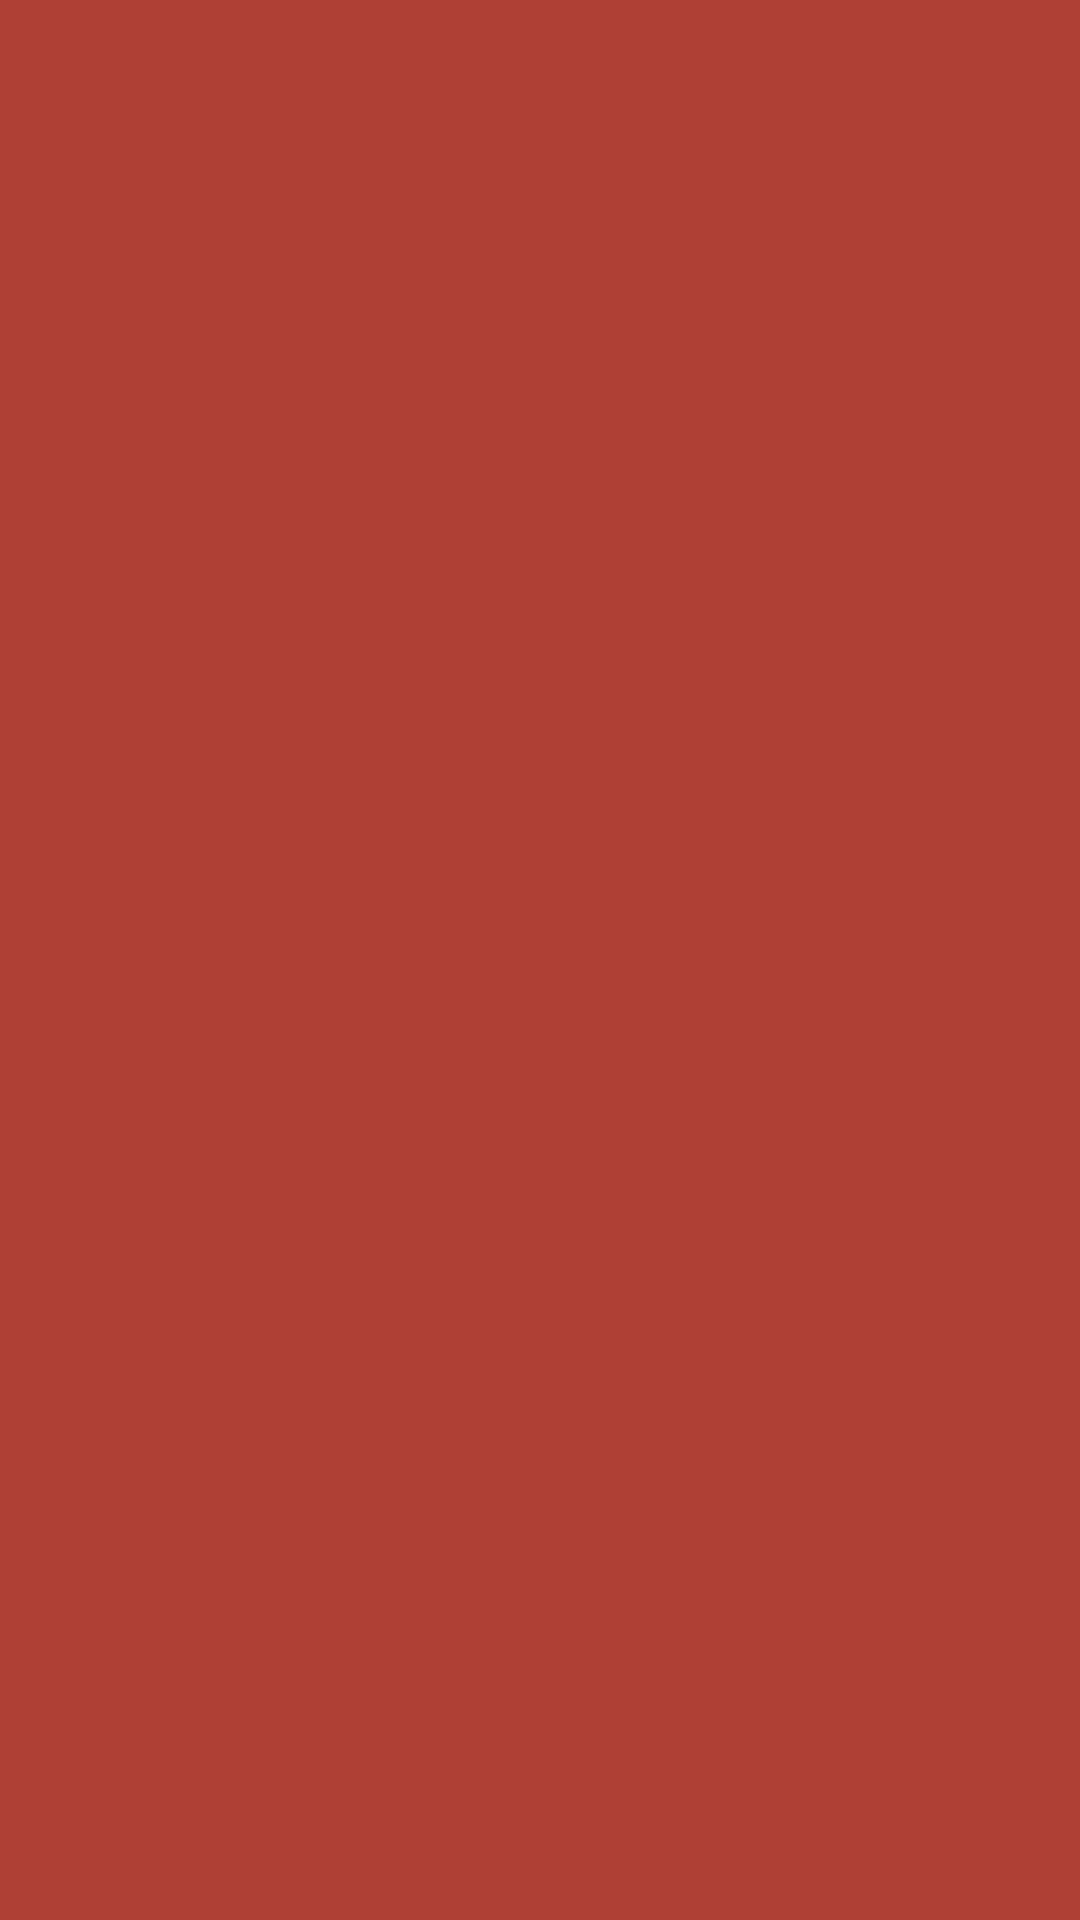 1080x1920 Medium Carmine Solid Color Background